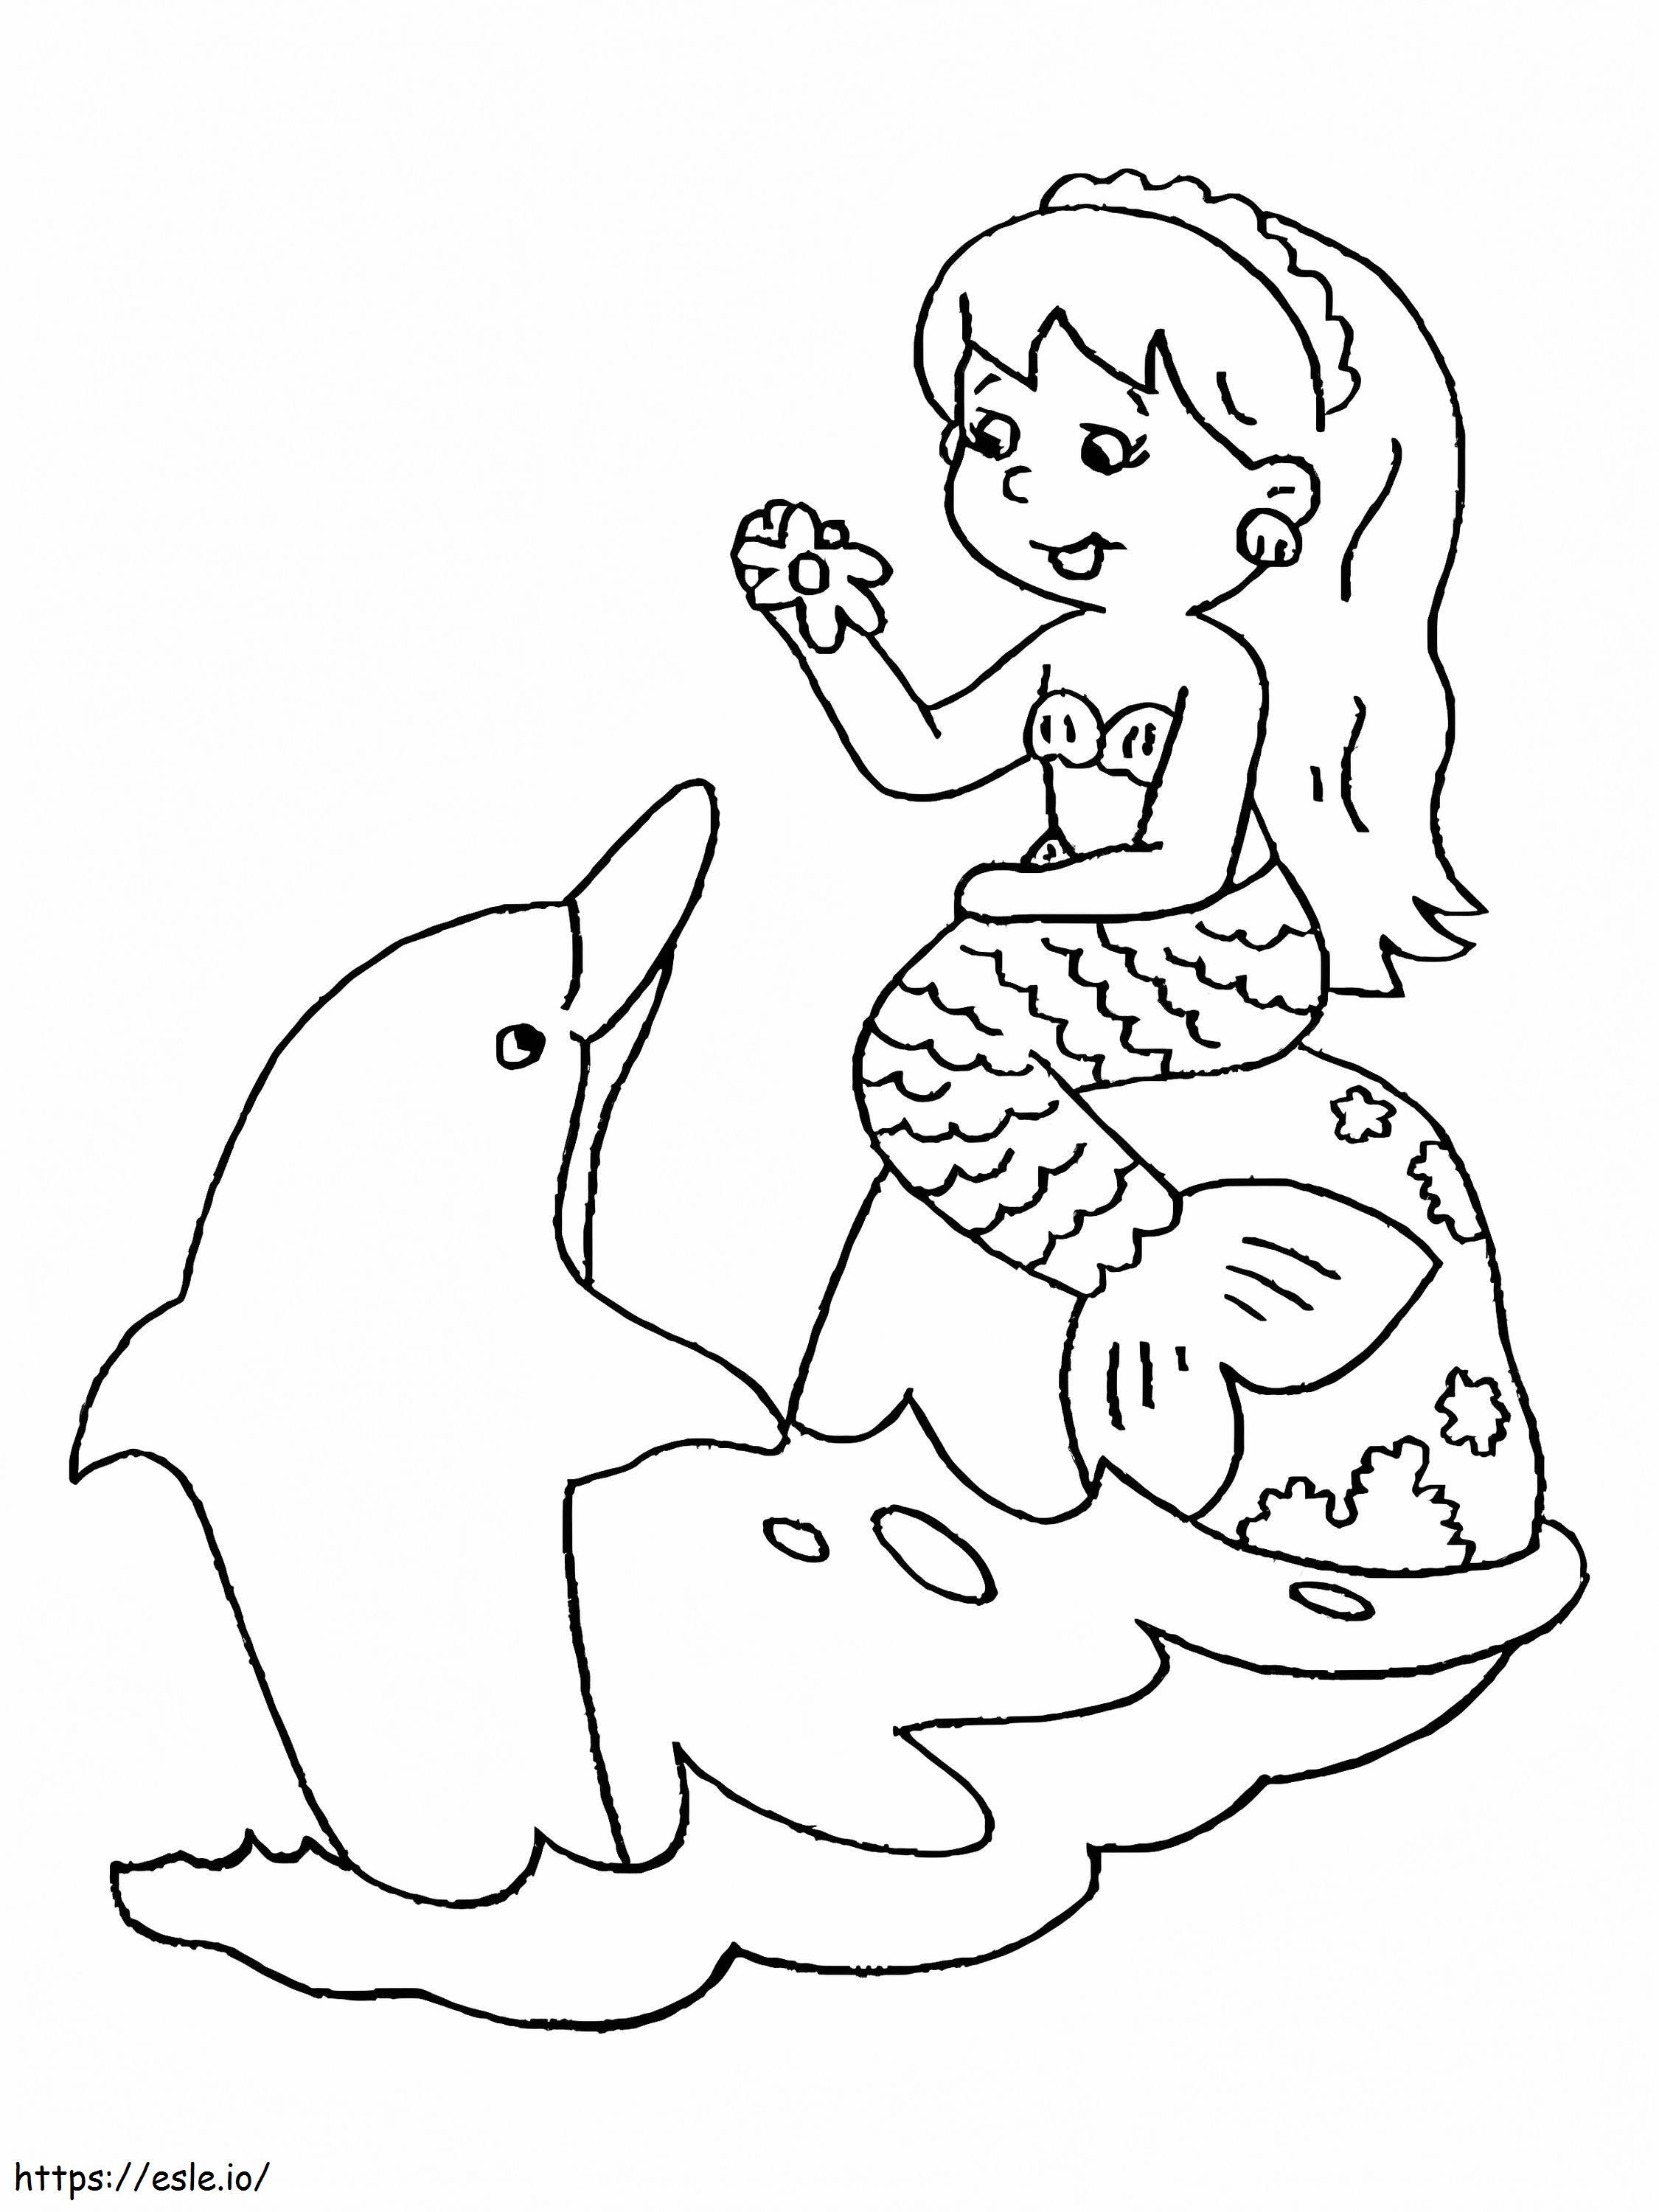 Putri duyung dan lumba-lumba Gambar Mewarnai